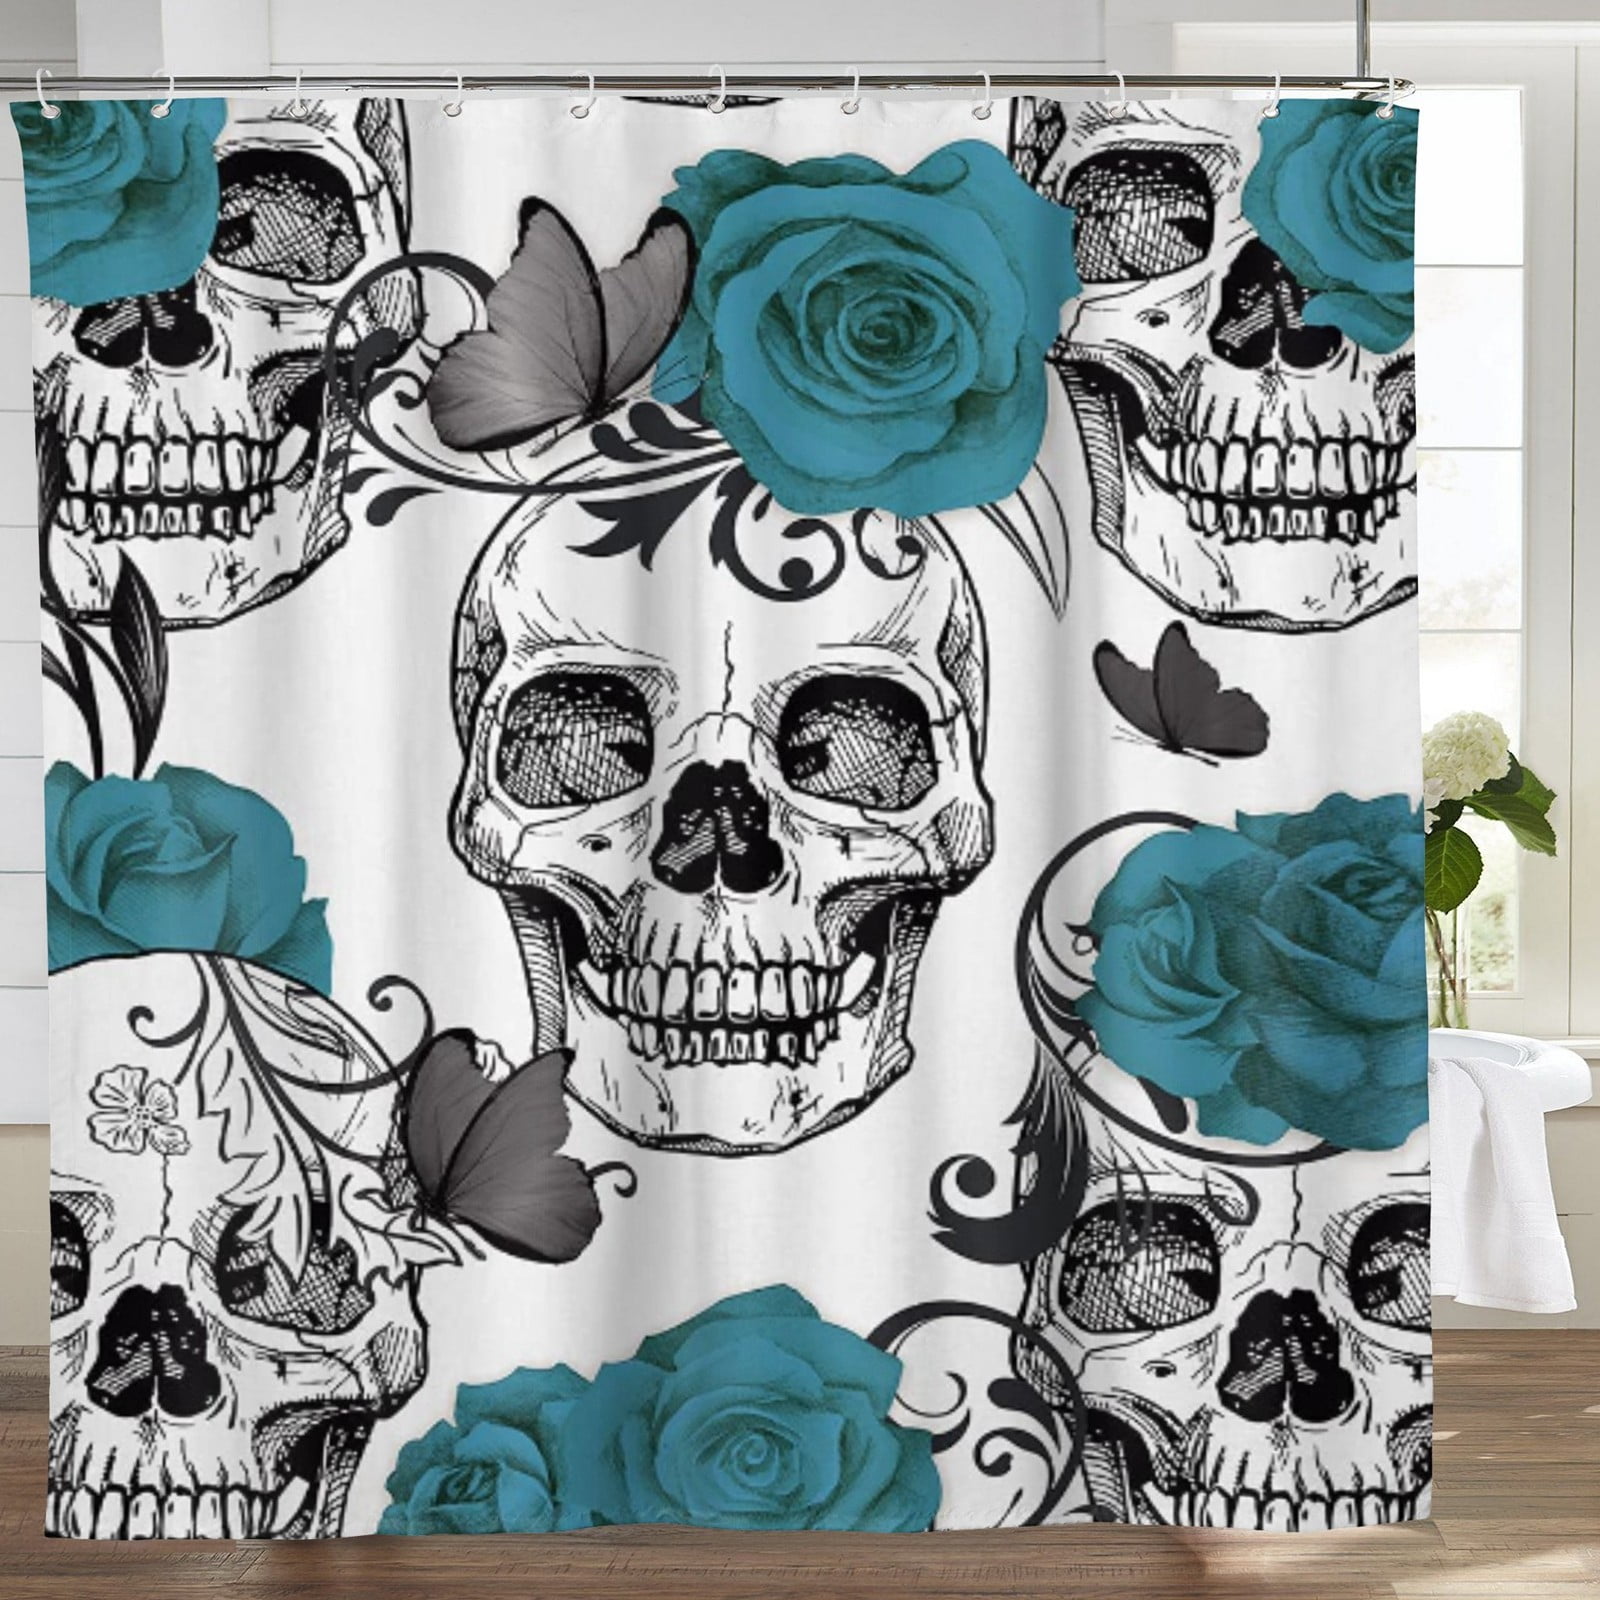 Retro skeleton Bathroom Shower Curtain Waterproof Fabric w/12 Hooks 71*71inch 